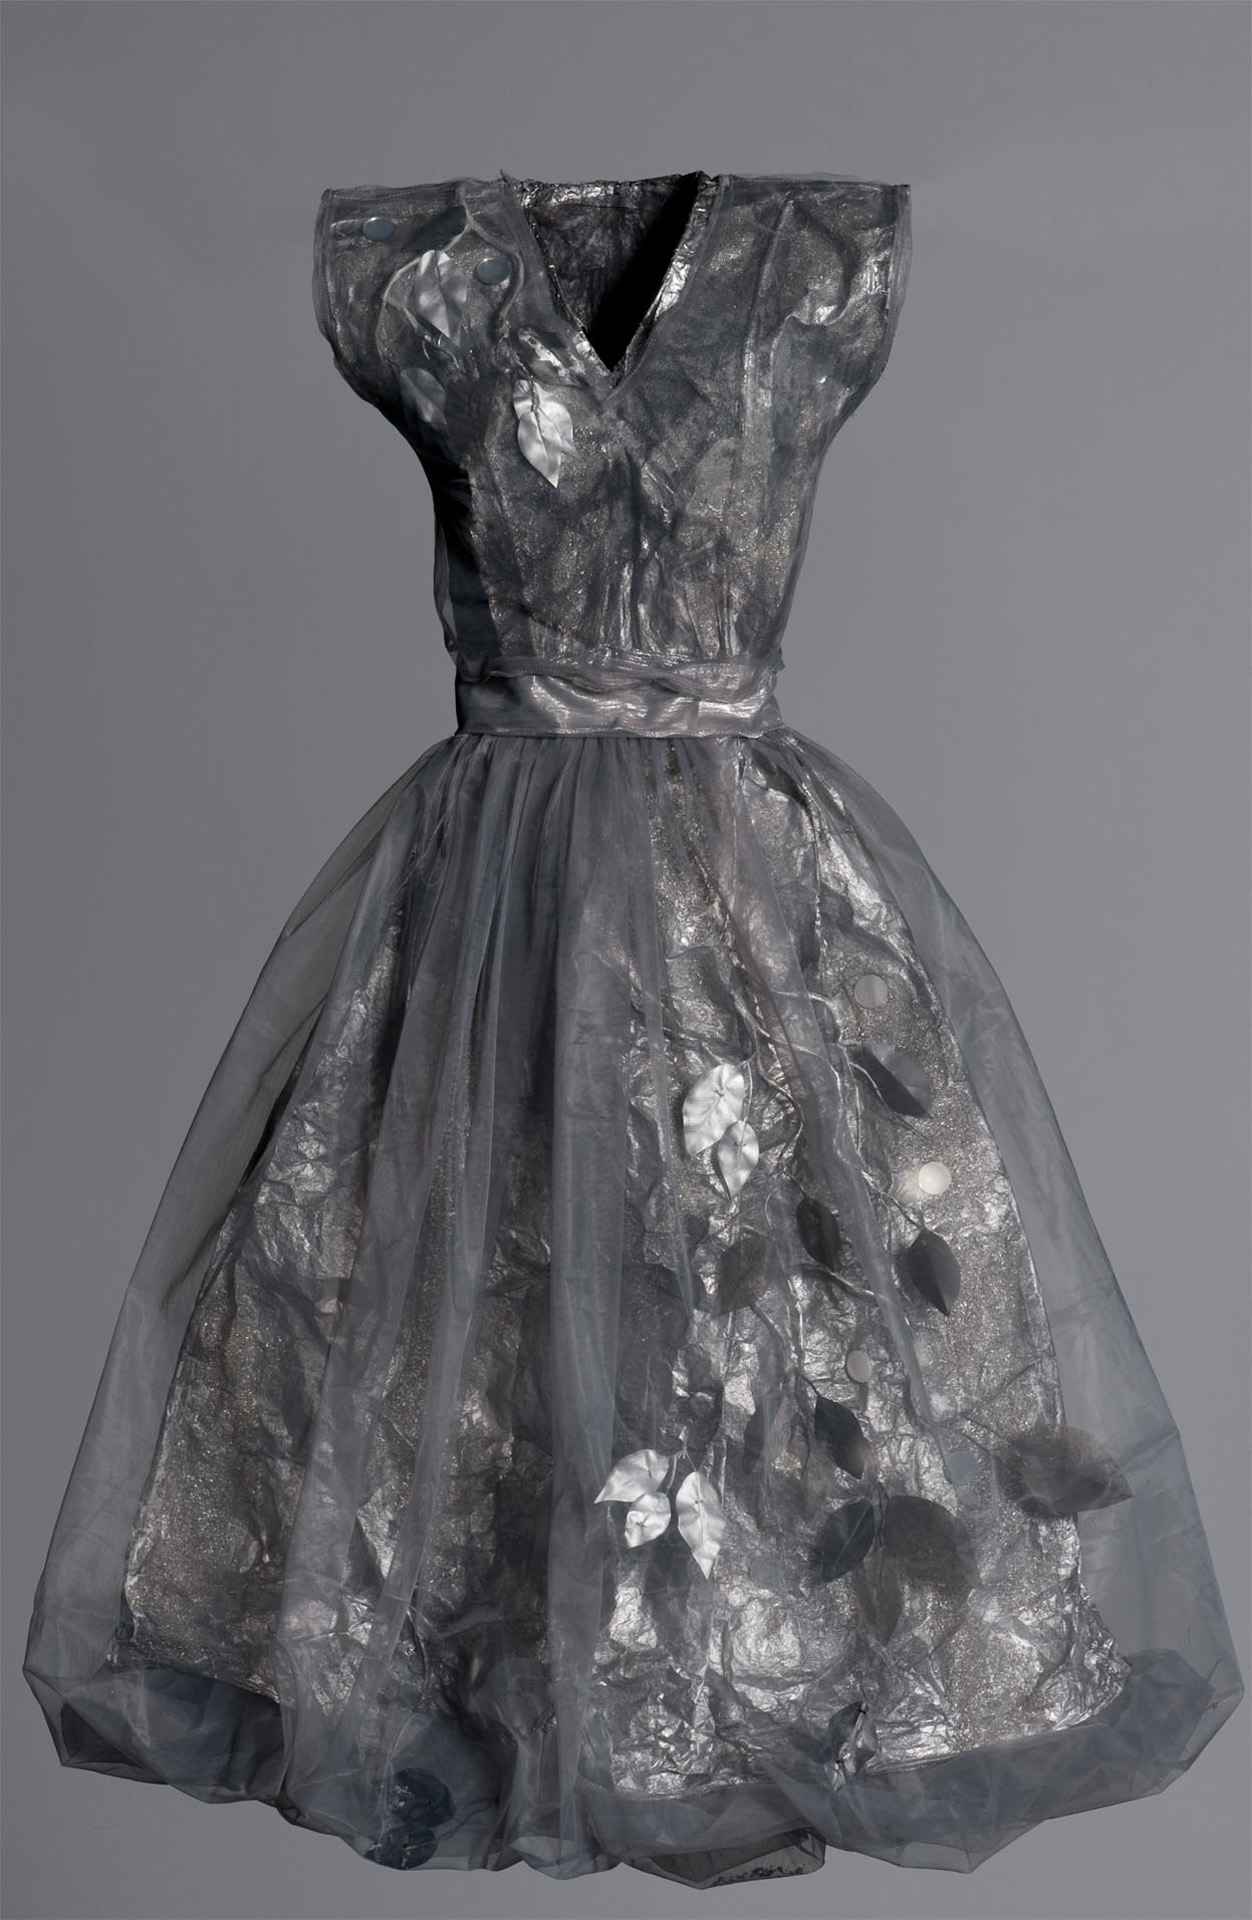   Dress for Persephone (Pére Lachaise) , 2010. Paper, mixed media, fabric, acrylic, mirrors, aluminum shaving, Mylar.&nbsp; App. 5 1/2’ x 3 3/4’ x 2’ deep, wall-mounted. 